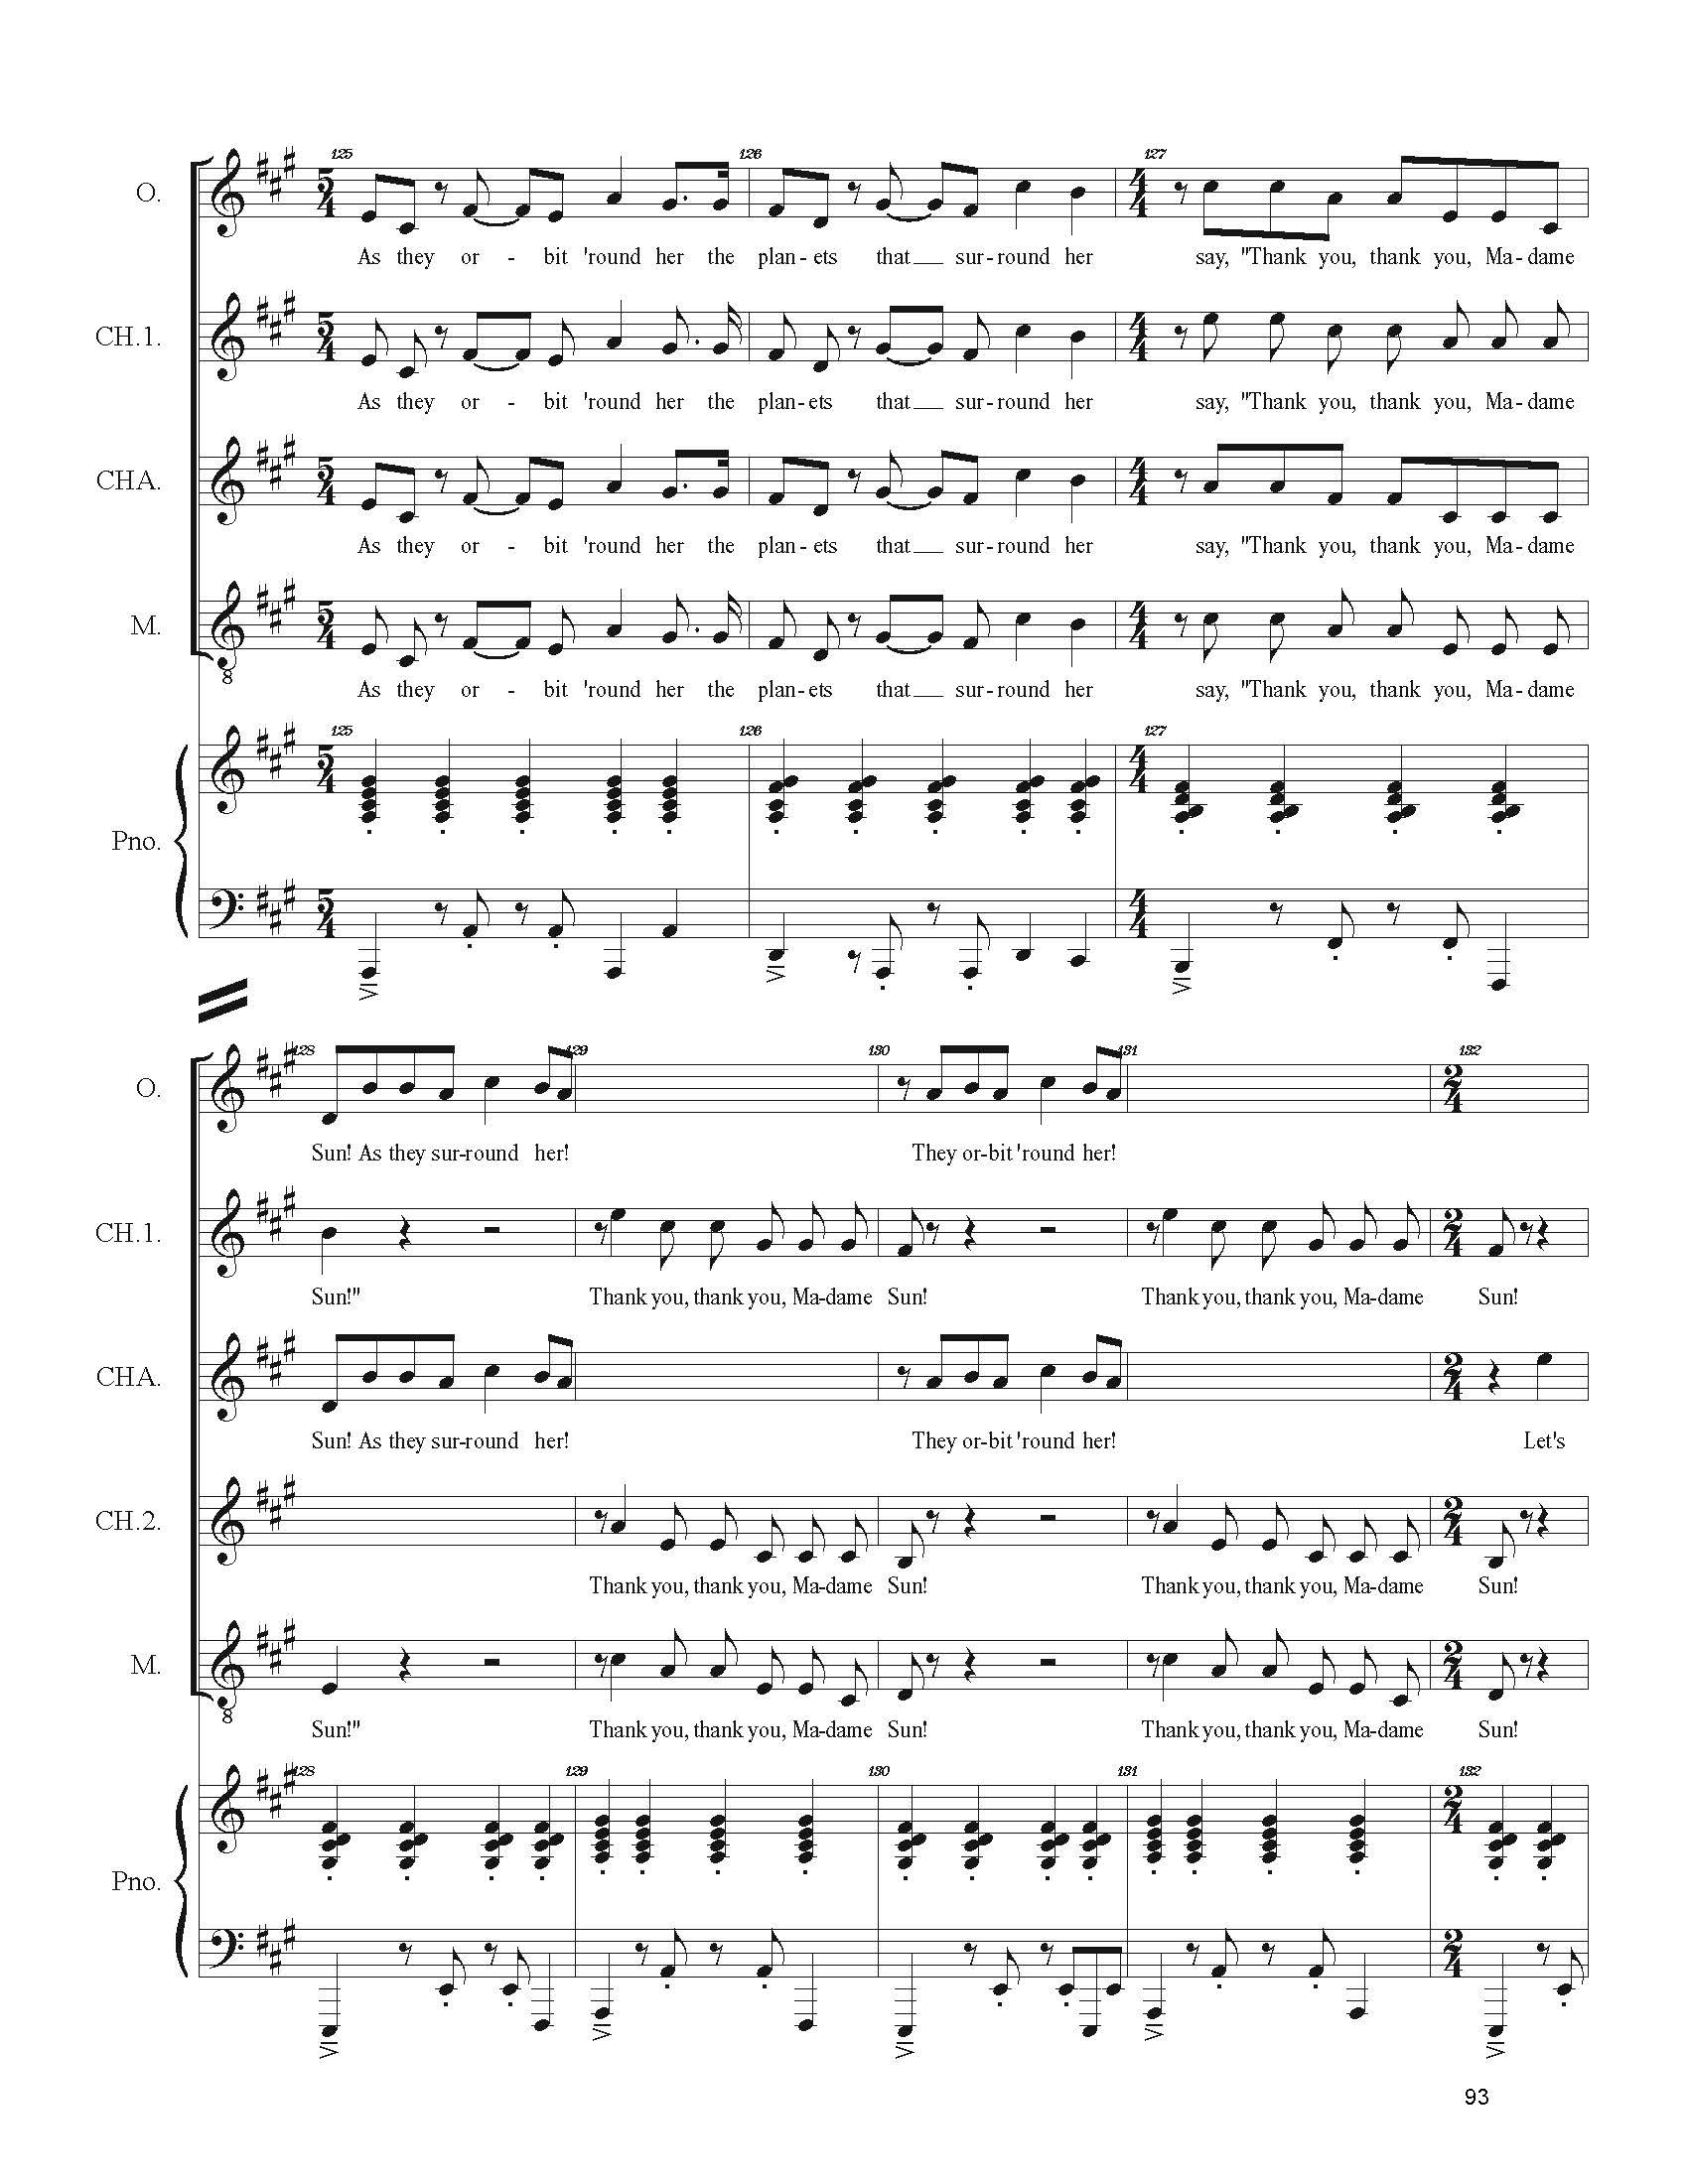 FULL PIANO VOCAL SCORE DRAFT 1 - Score_Page_093.jpg